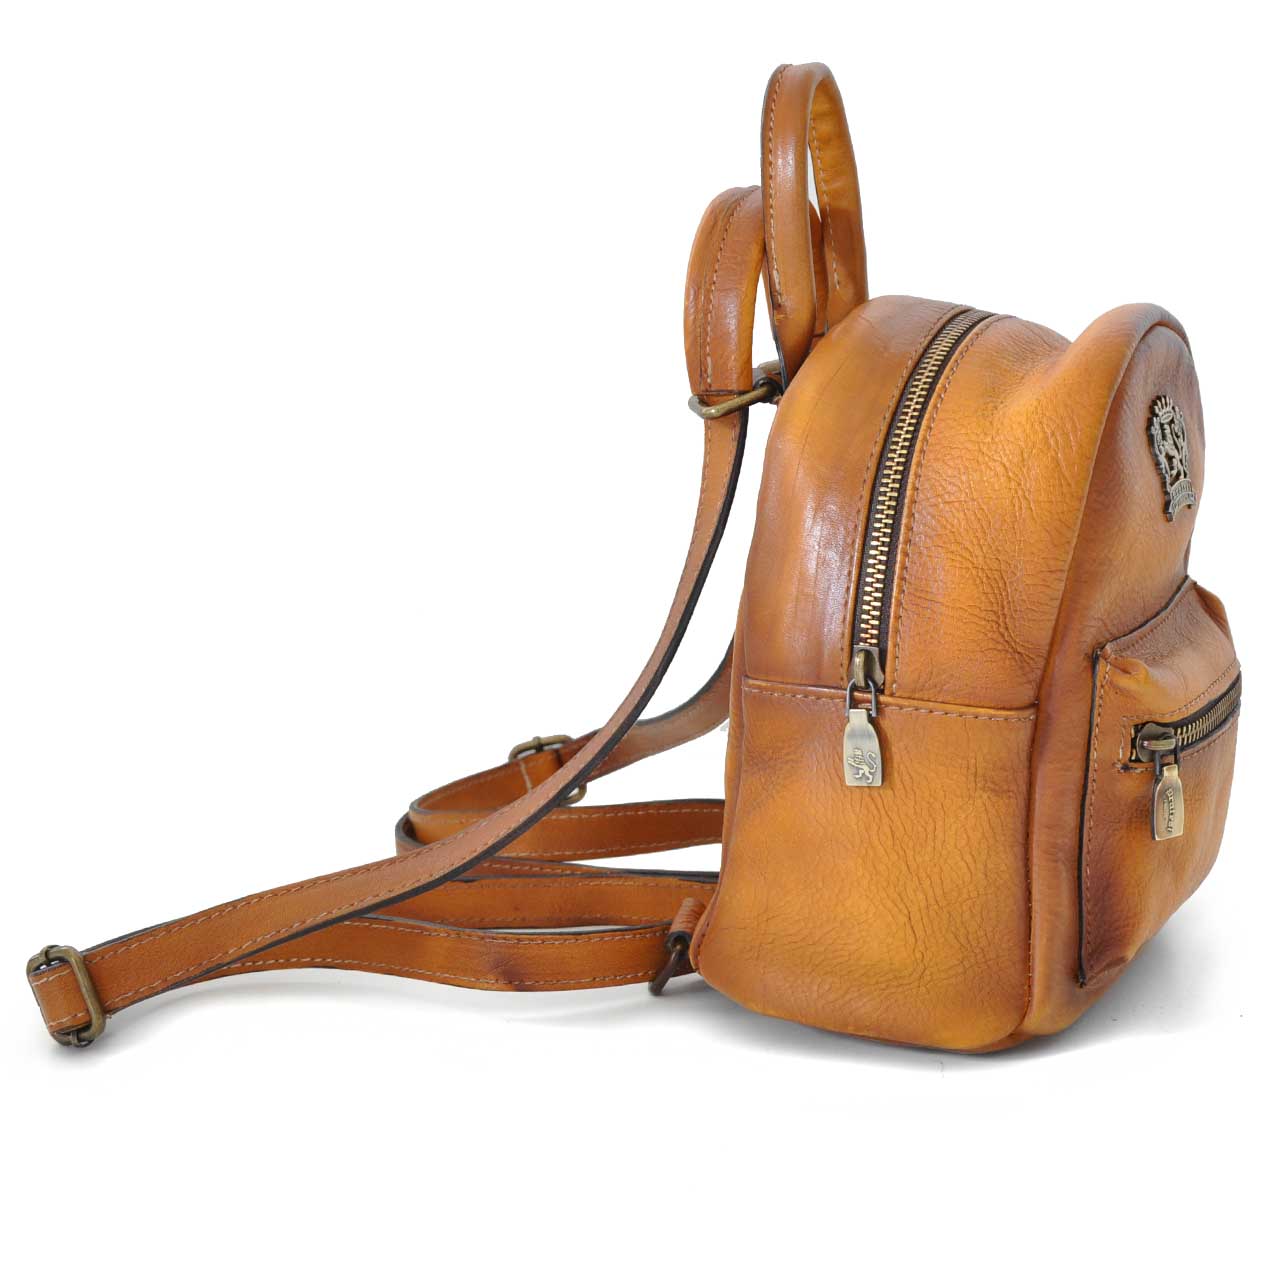 Pratesi Montegiovi Backpack in genuine Italian leather - Montegiovi Backpack B186 Brown